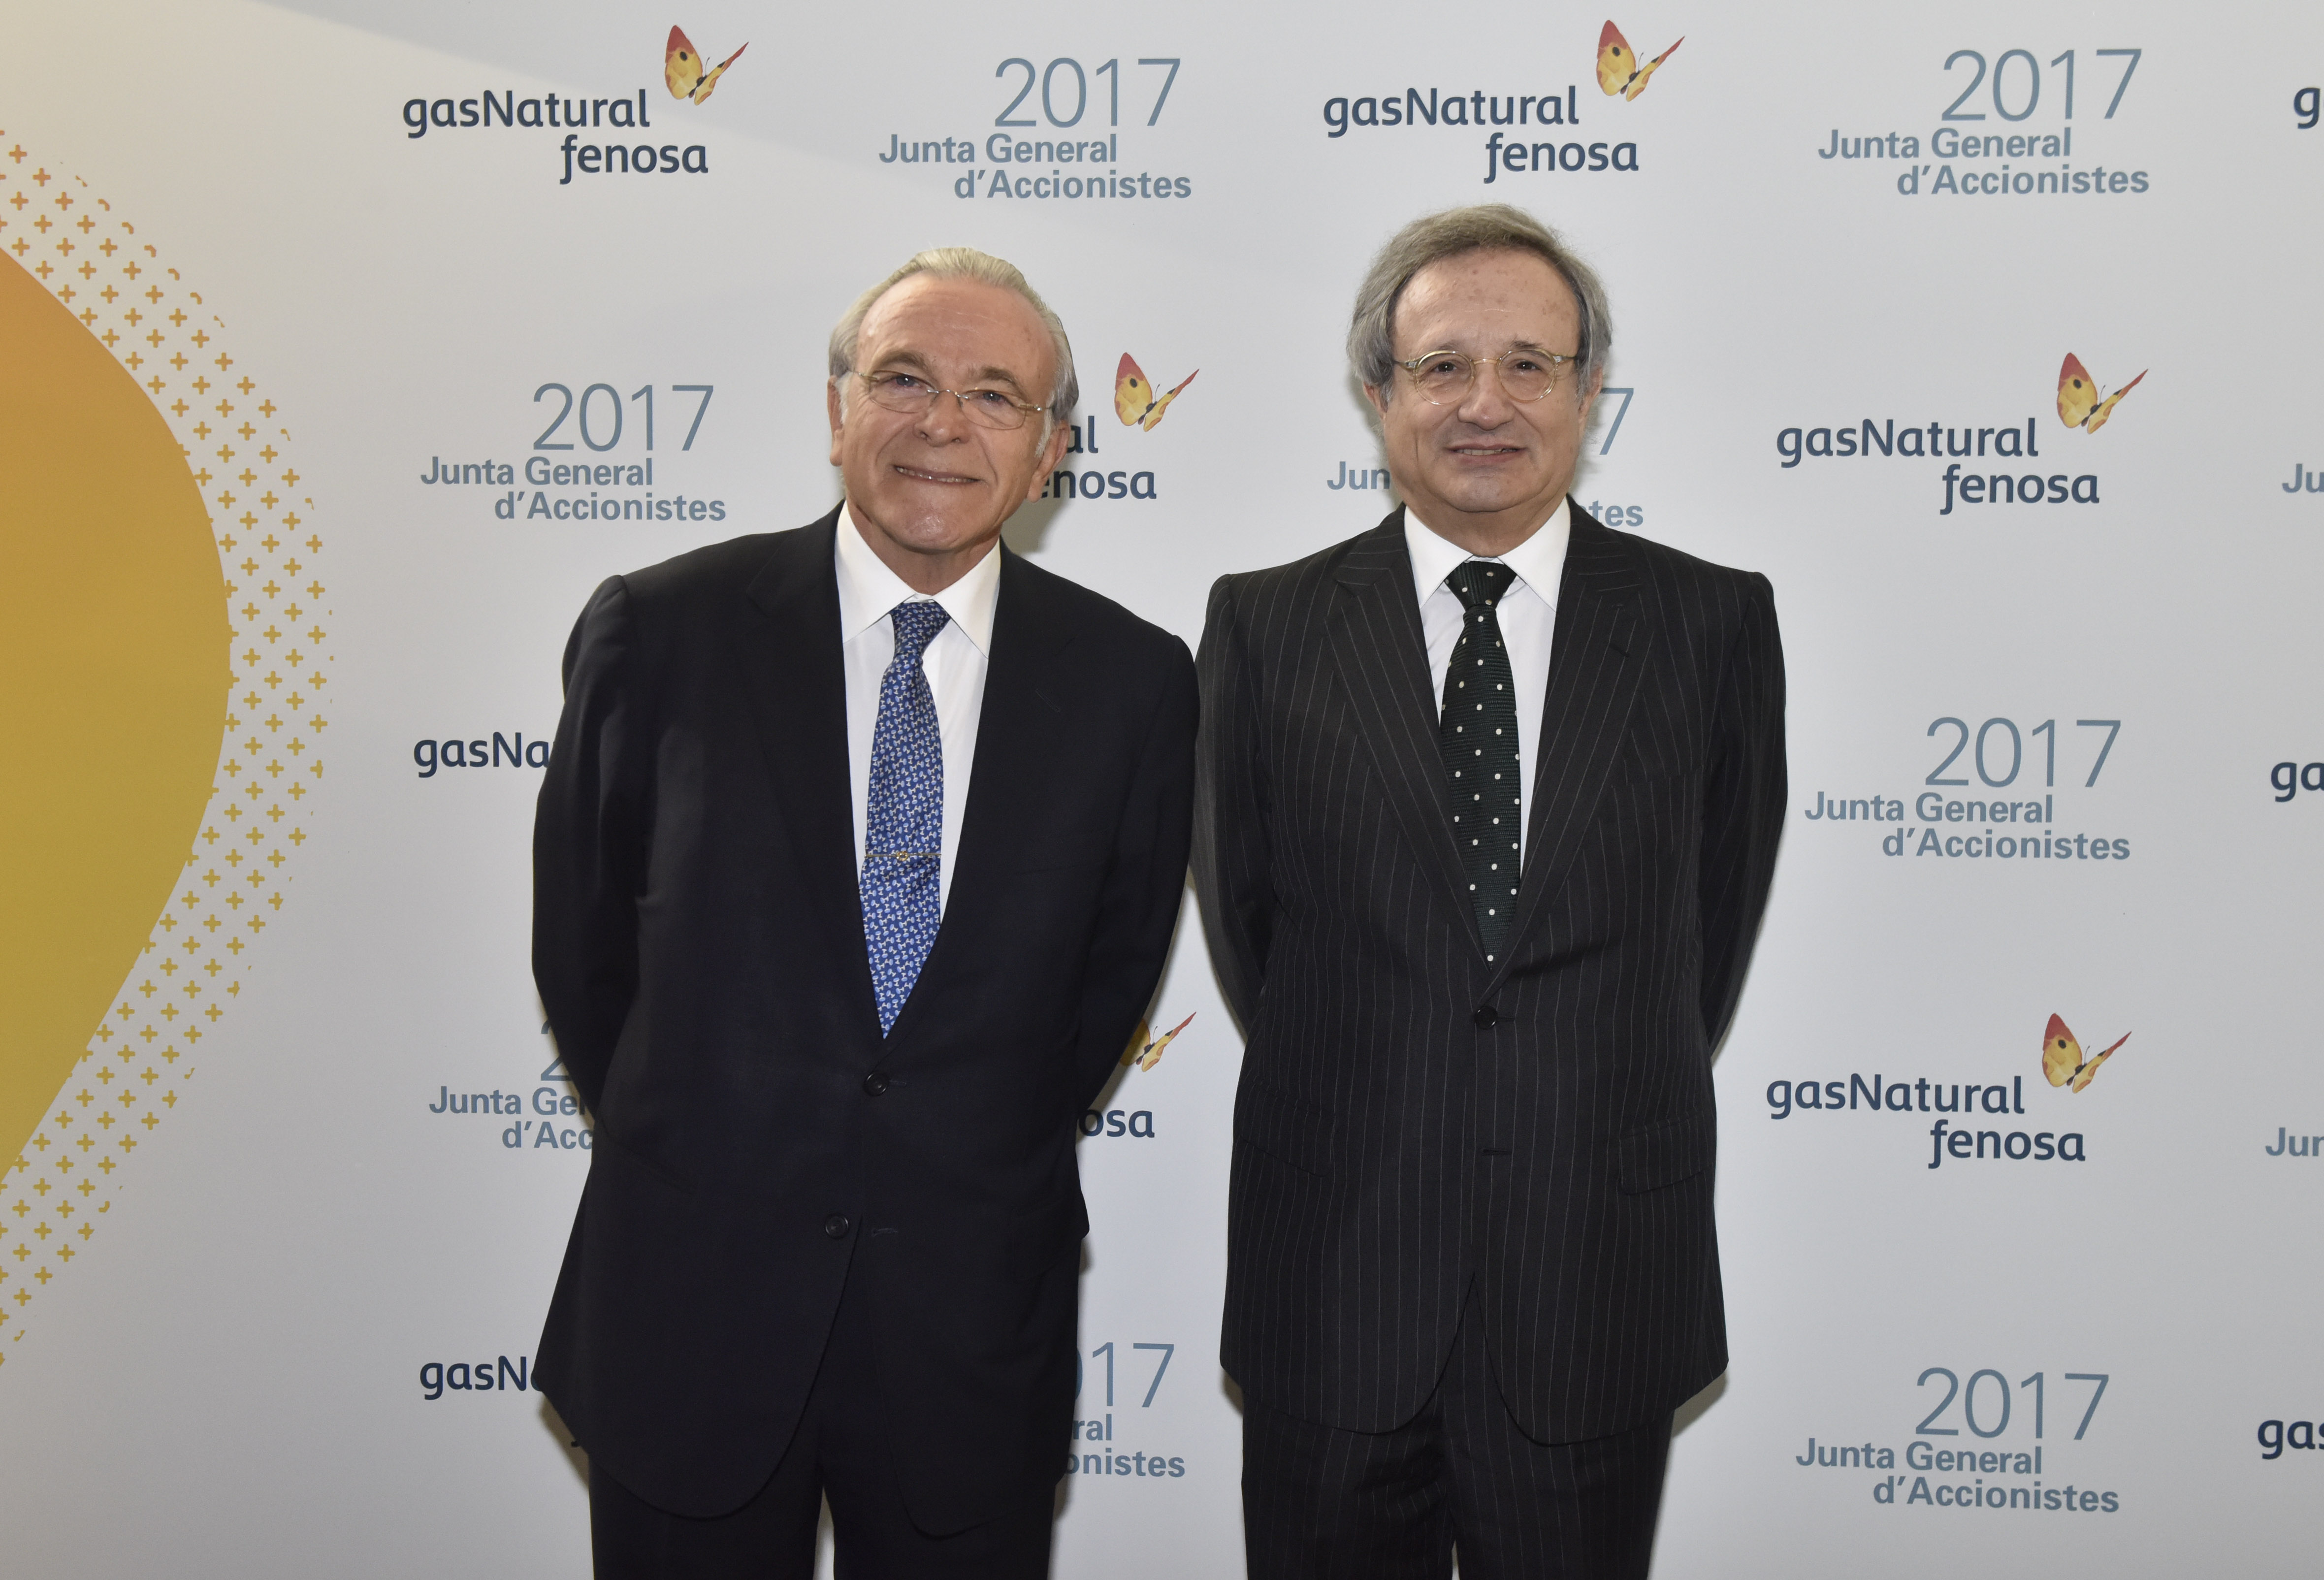 Fainé y Villaseca, presidente y CEO de Gas Natural Fenosa respectivamente